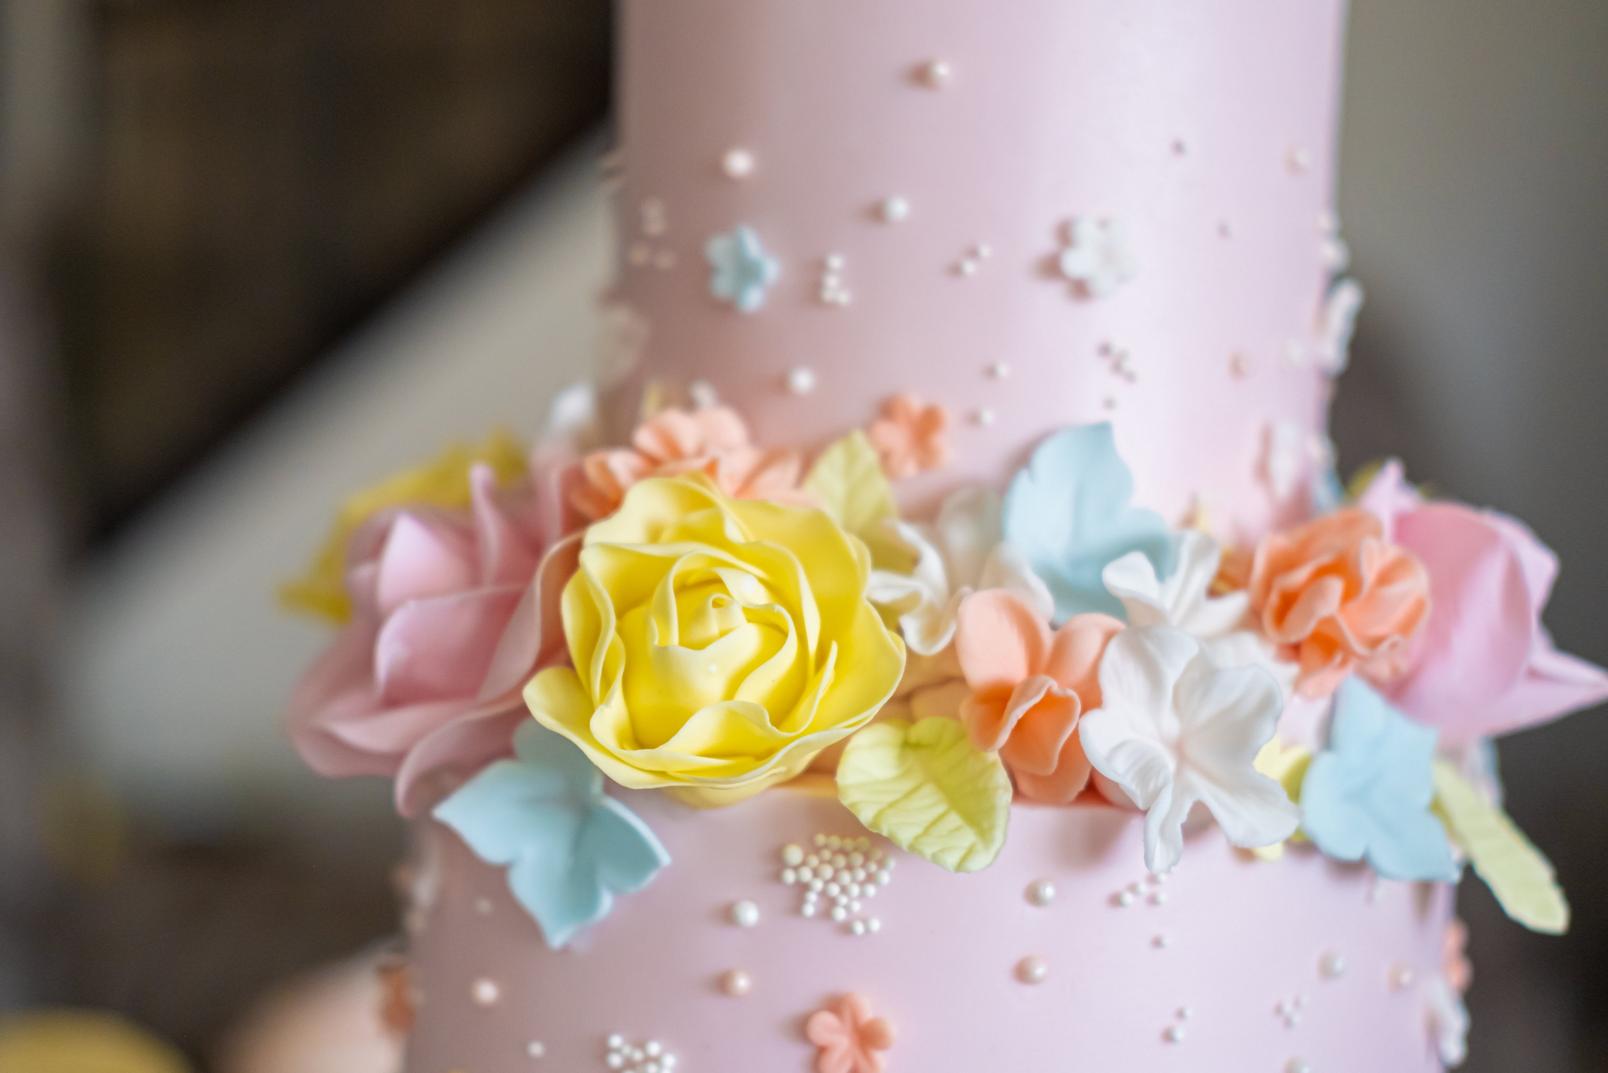 Top 999+ flower birthday cake images – Amazing Collection flower birthday cake images Full 4K